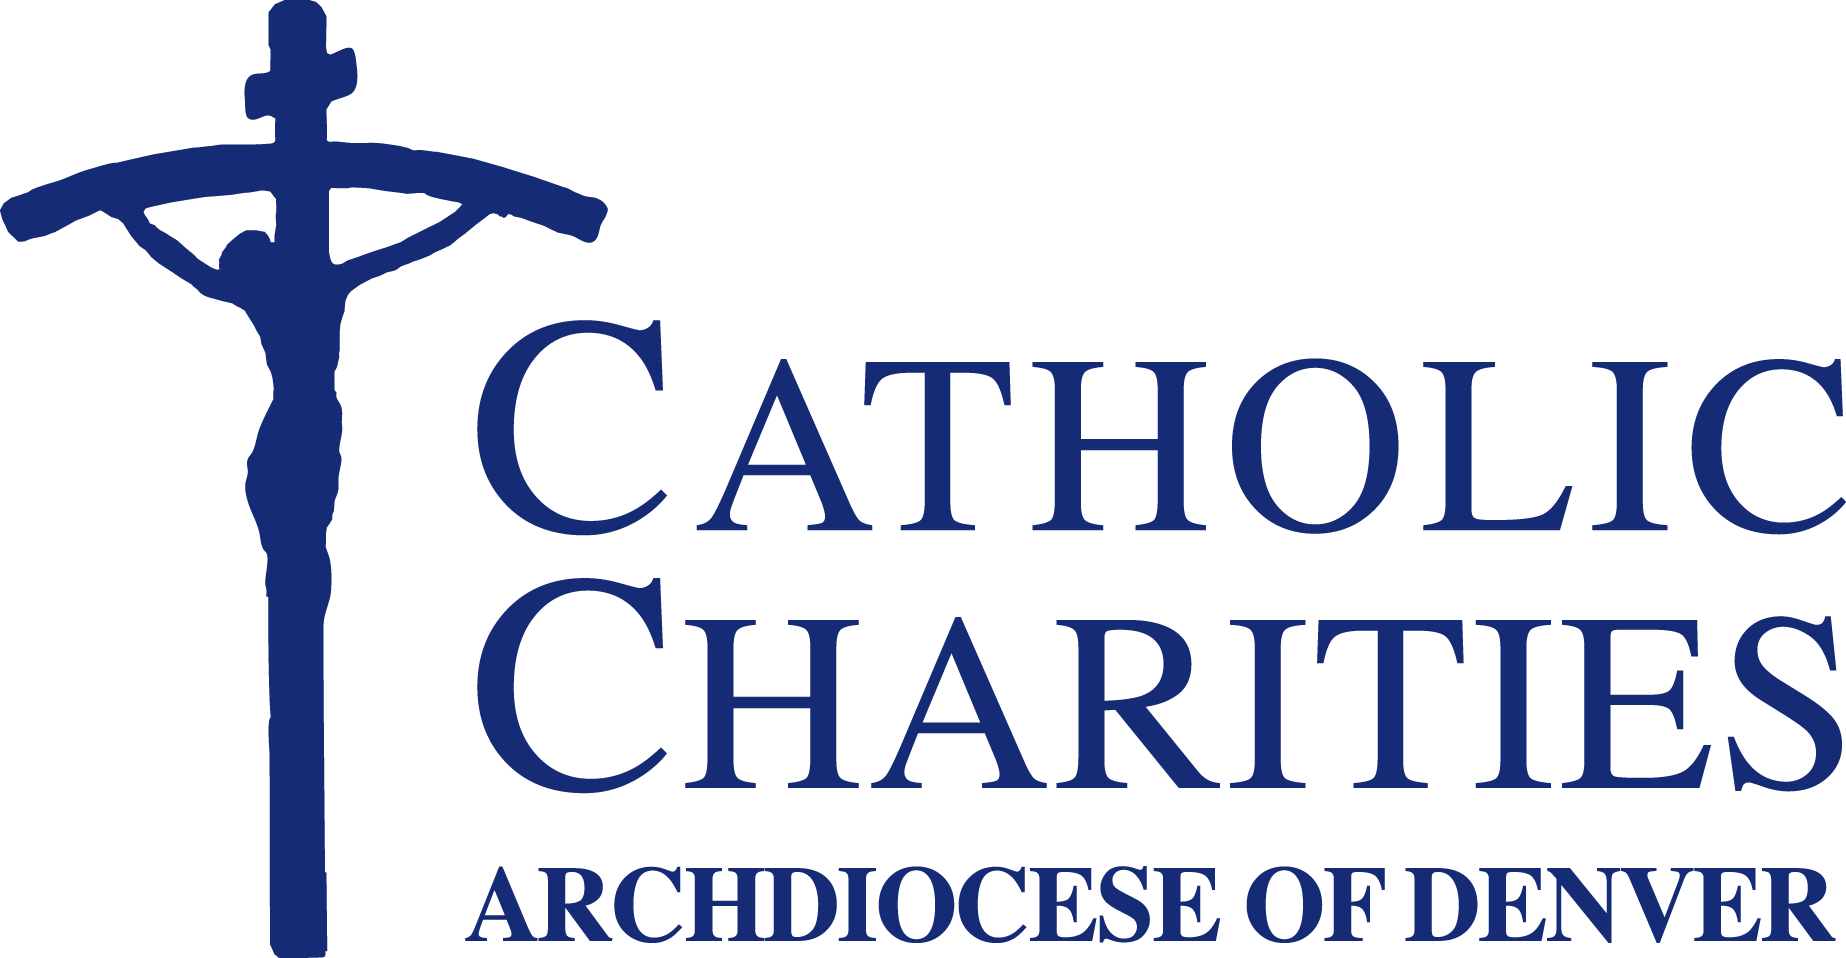 Catholic Charities of Denver